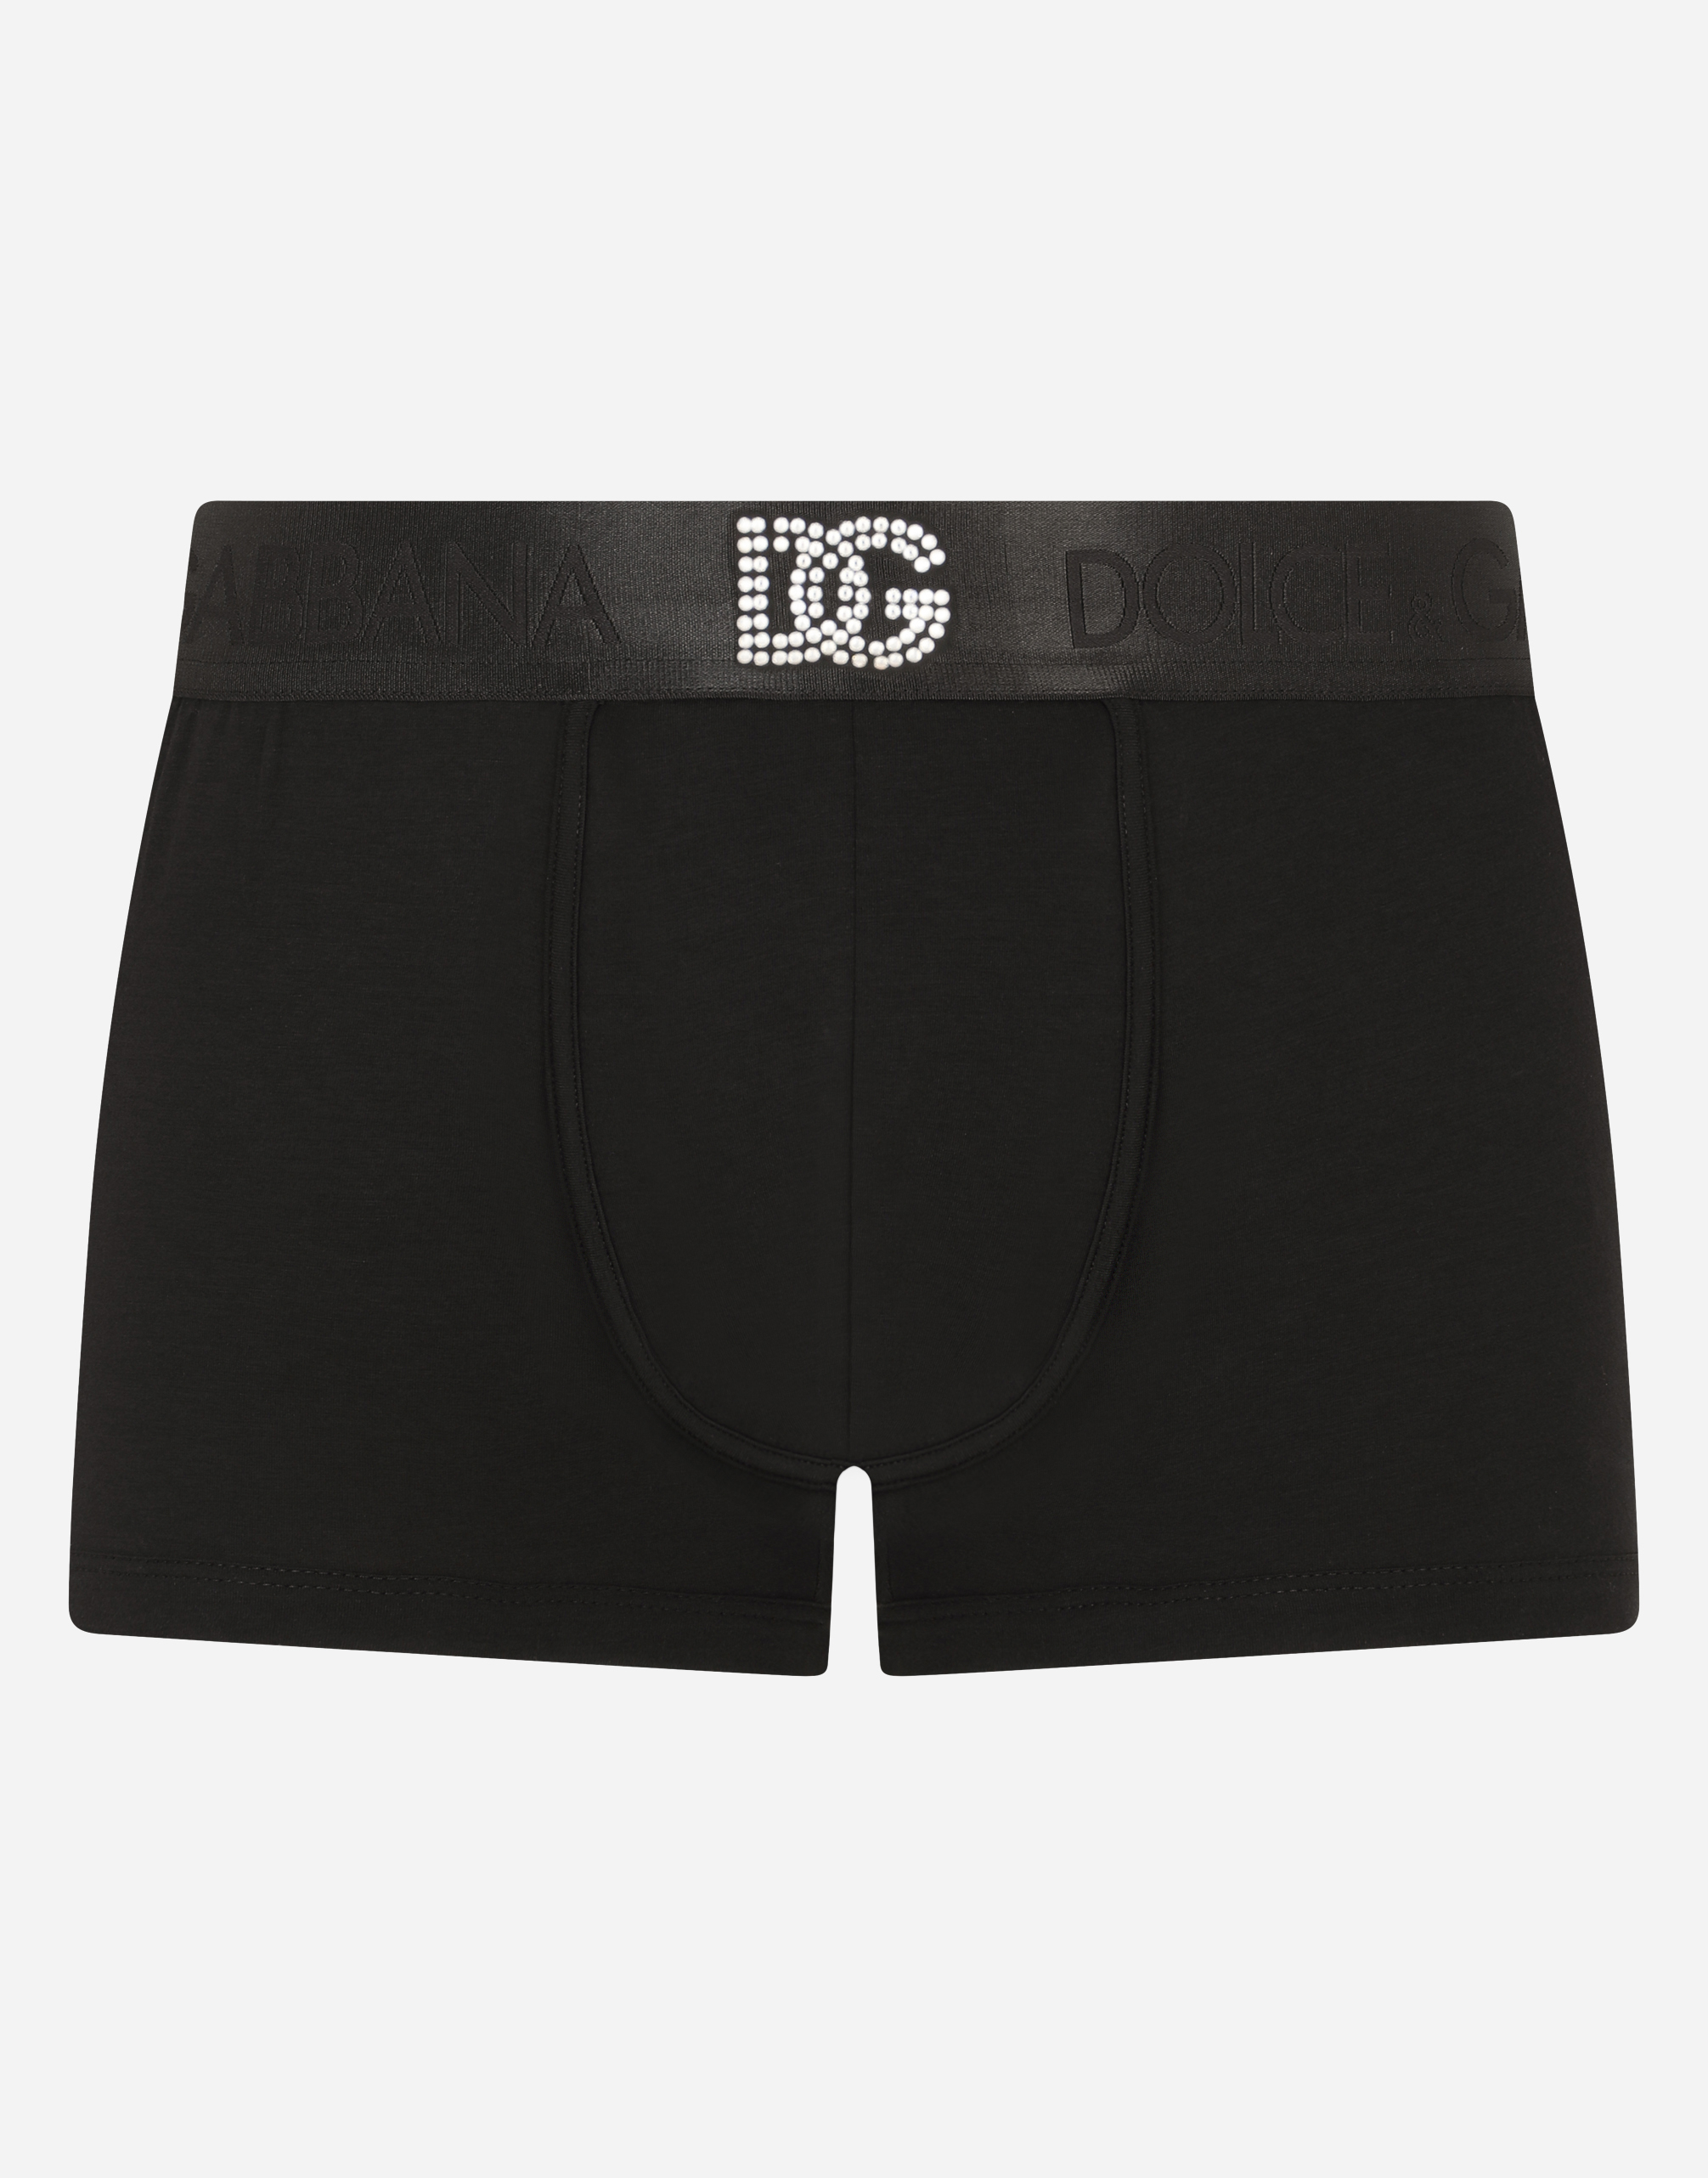 Stretch Pima cotton boxers with DG logo in Black